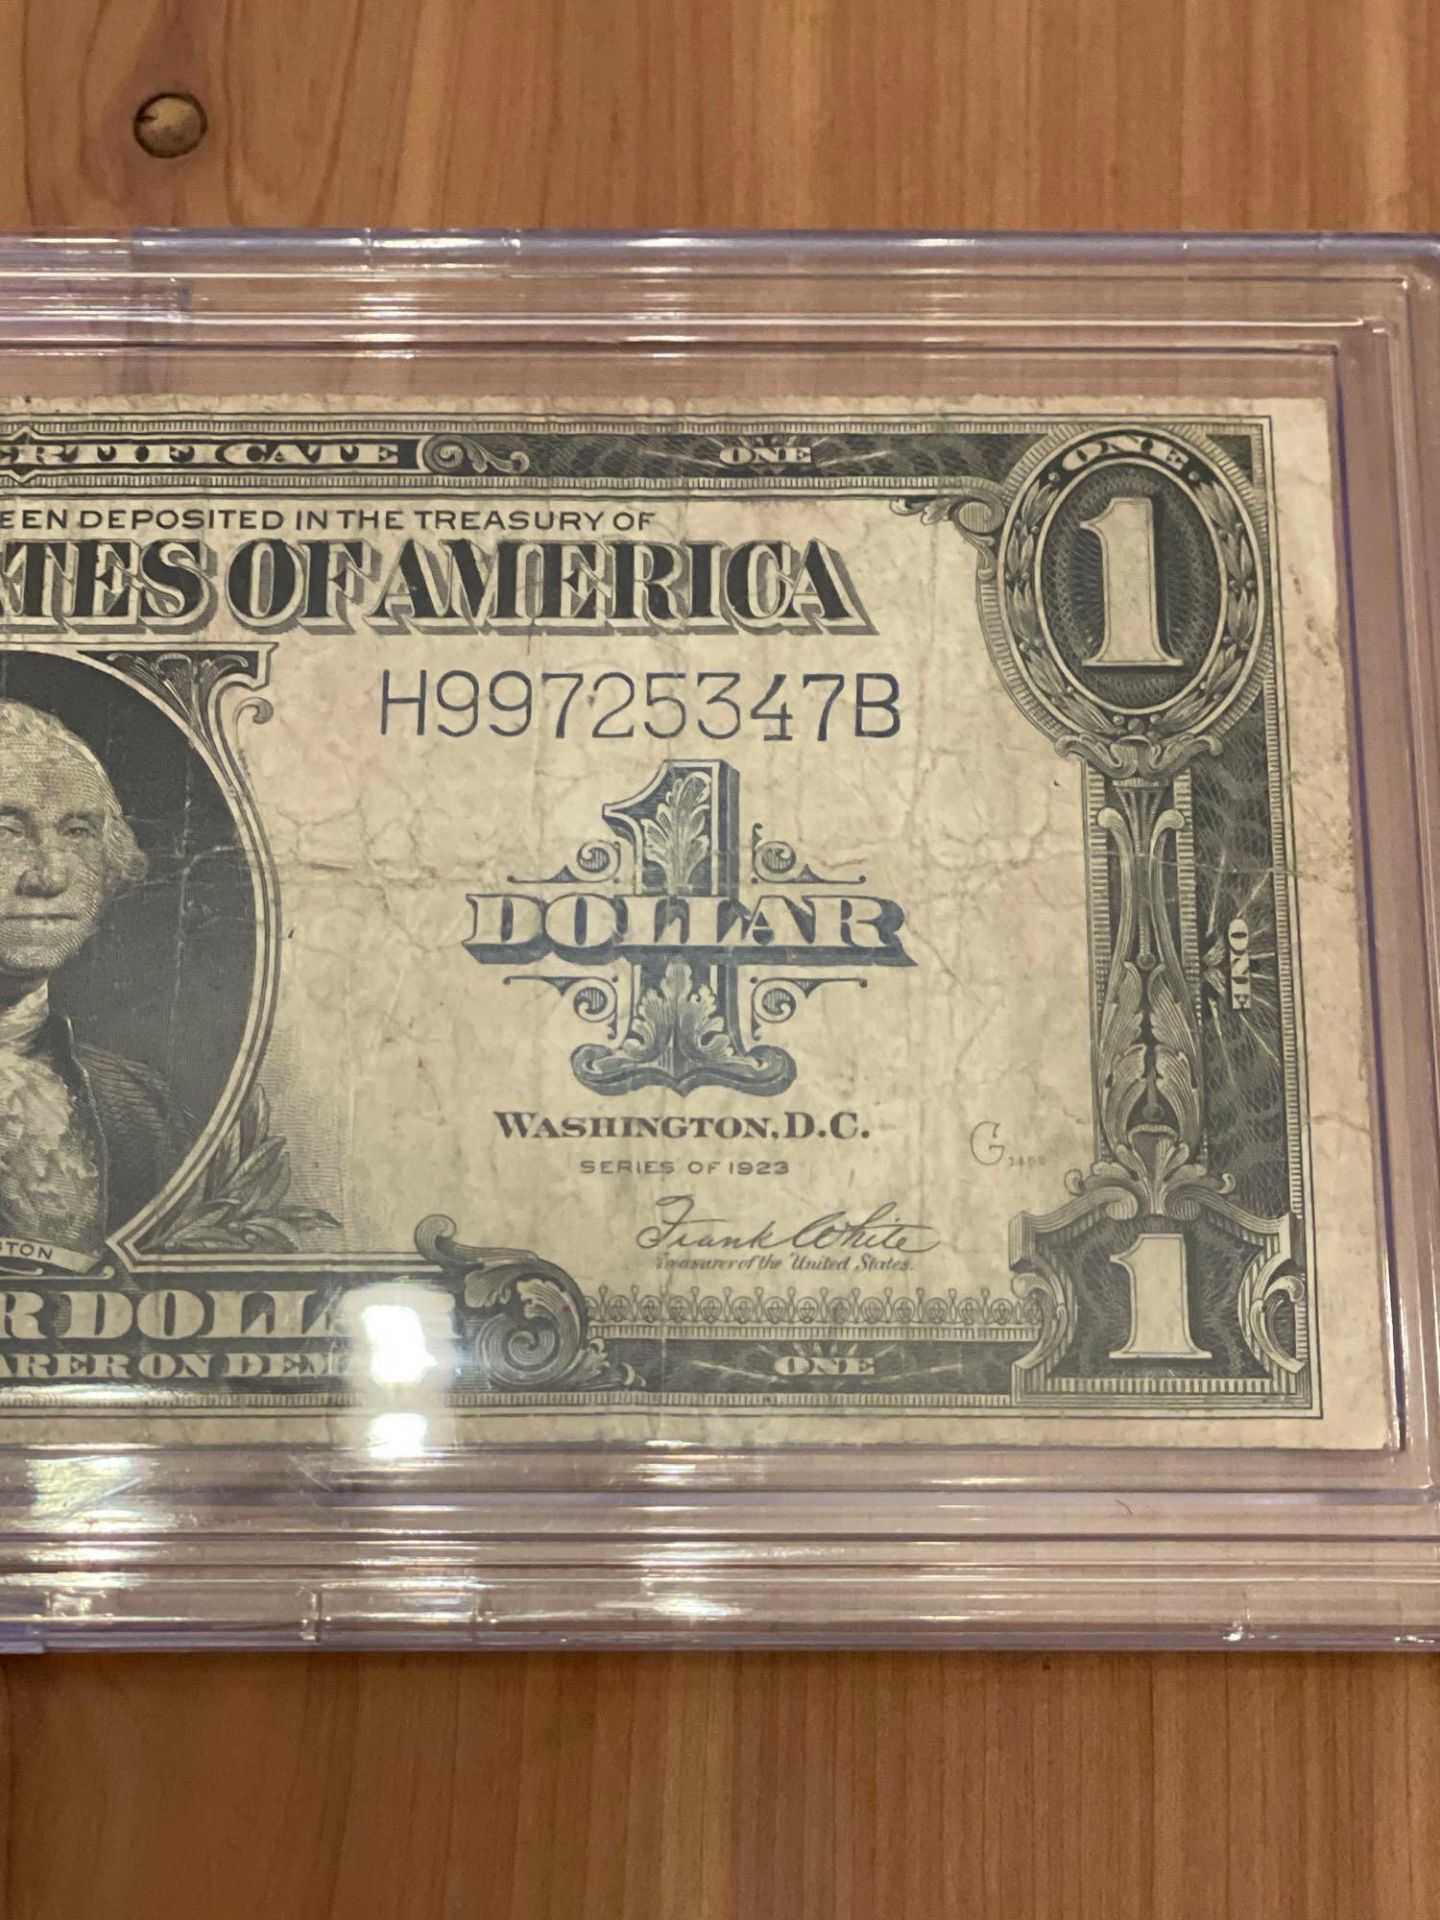 1923 $1 Fine Silver Certifcate "Horse Blanket" - Image 2 of 4